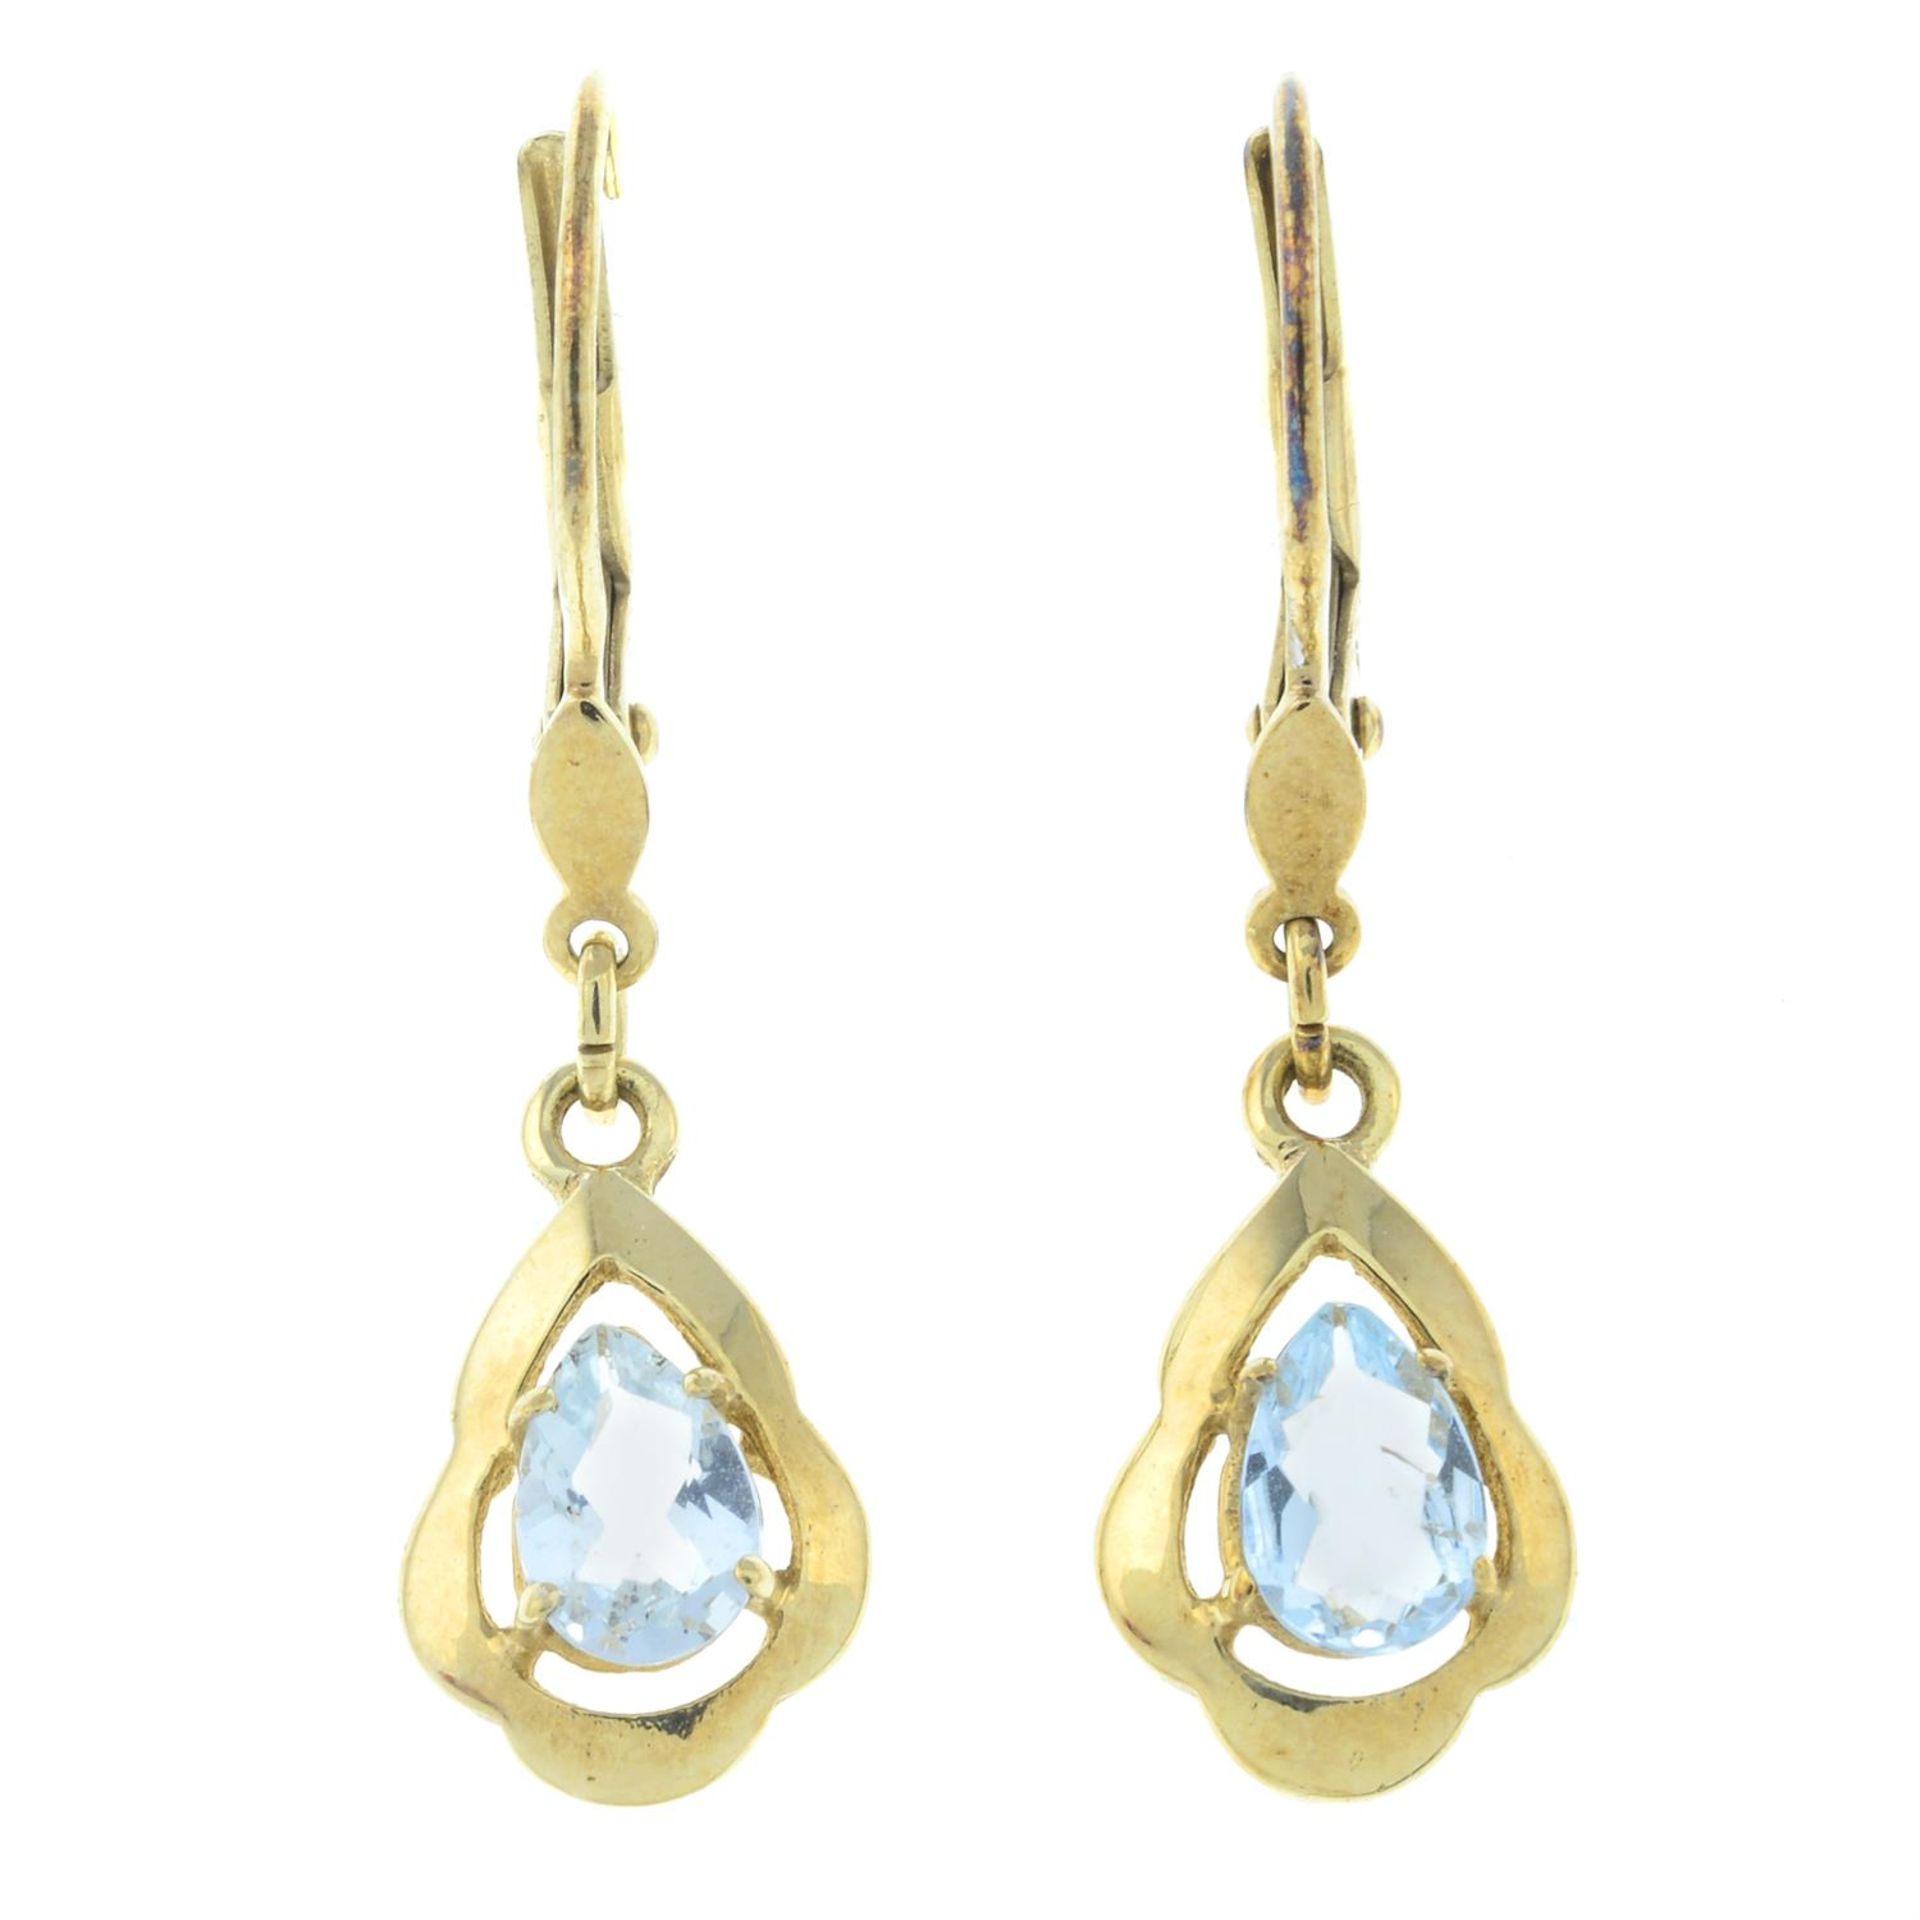 A pair of blue topaz drop earrings.